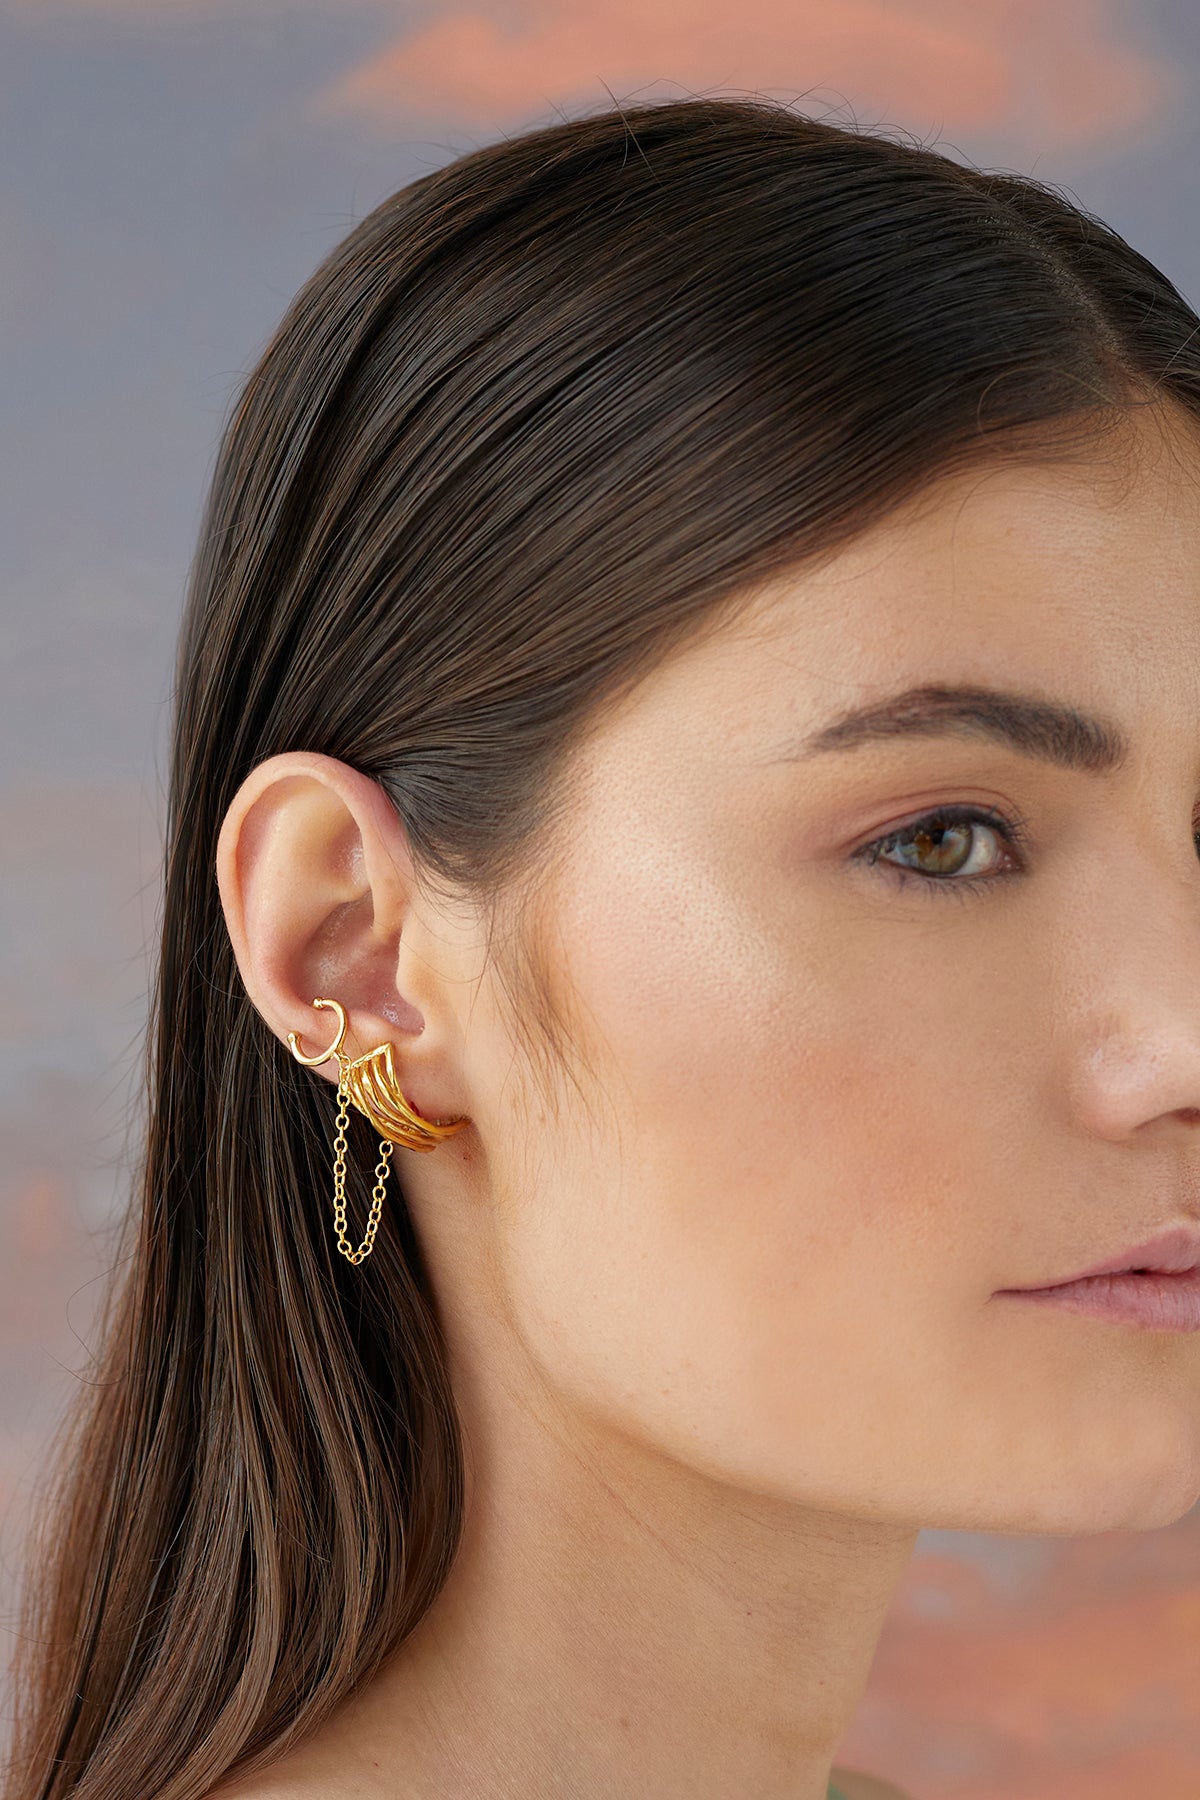 Mehruz Earrings 6 gms With an Elongated Design 22k Gold plated Over Brass - ZEWAR Jewelry